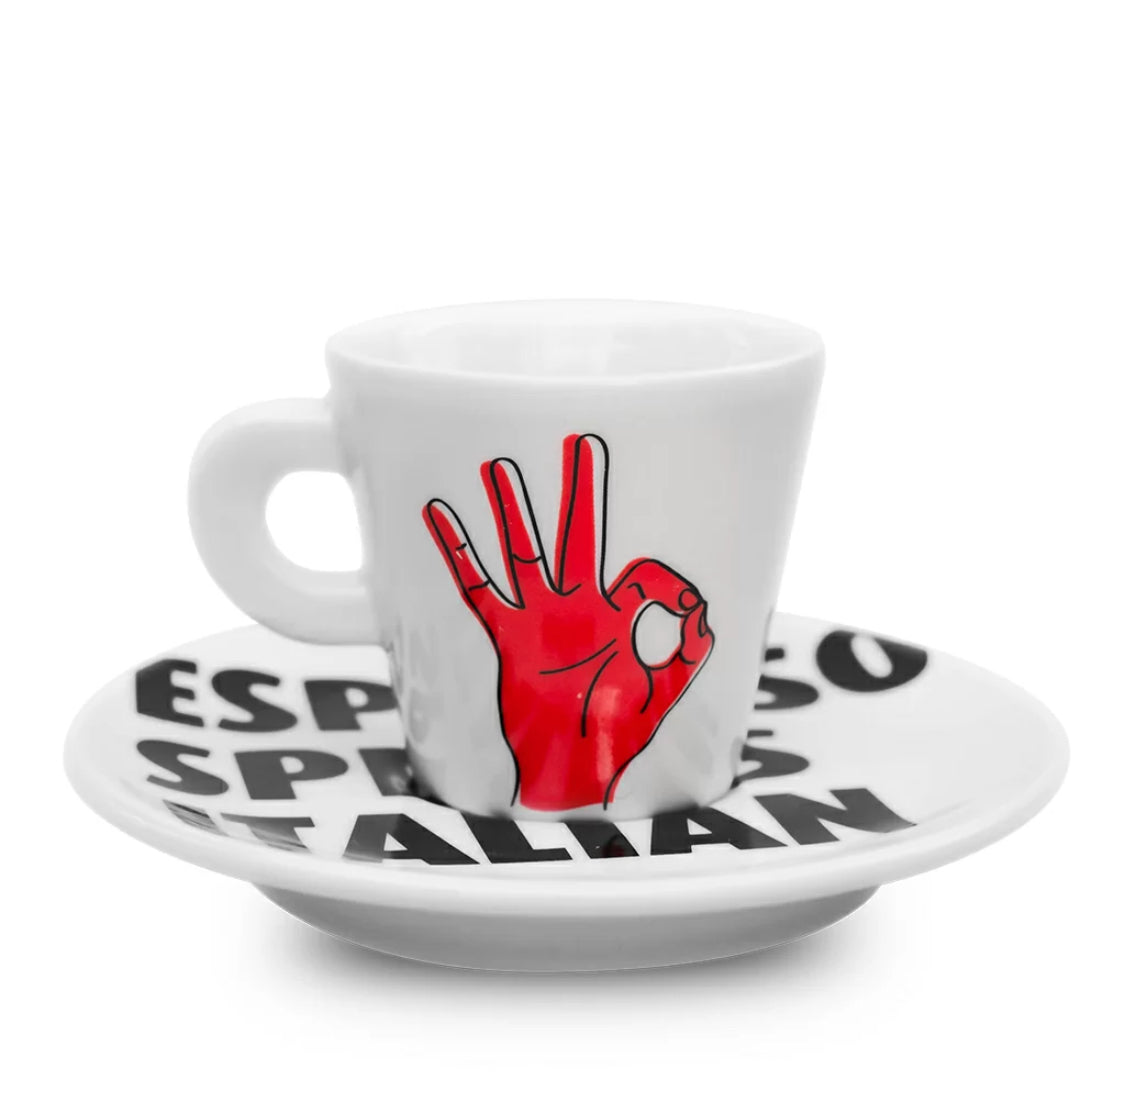 Espresso Speaks Italian Cups (Set of 6)